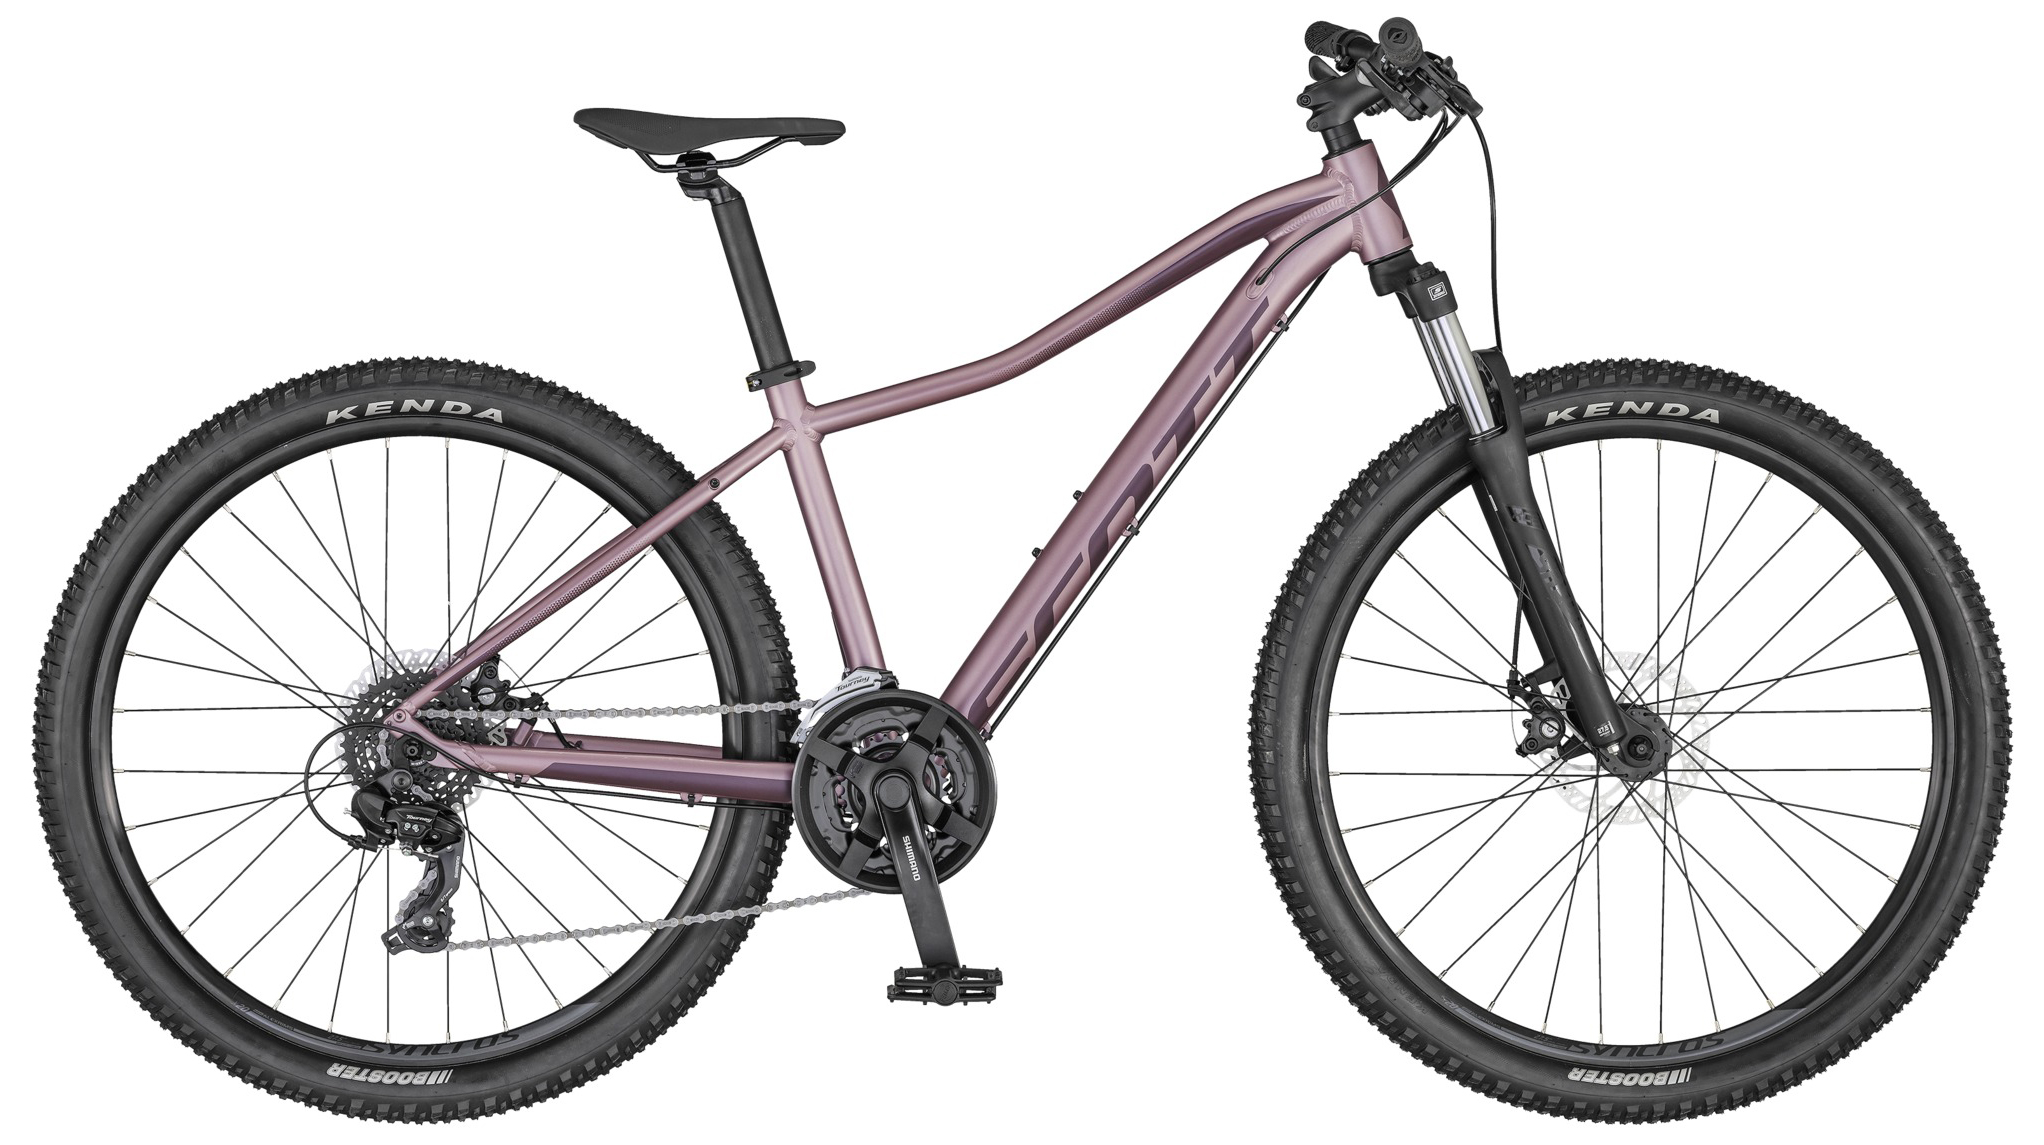  Отзывы о Женском велосипеде Scott Contessa Active 60 29 2020